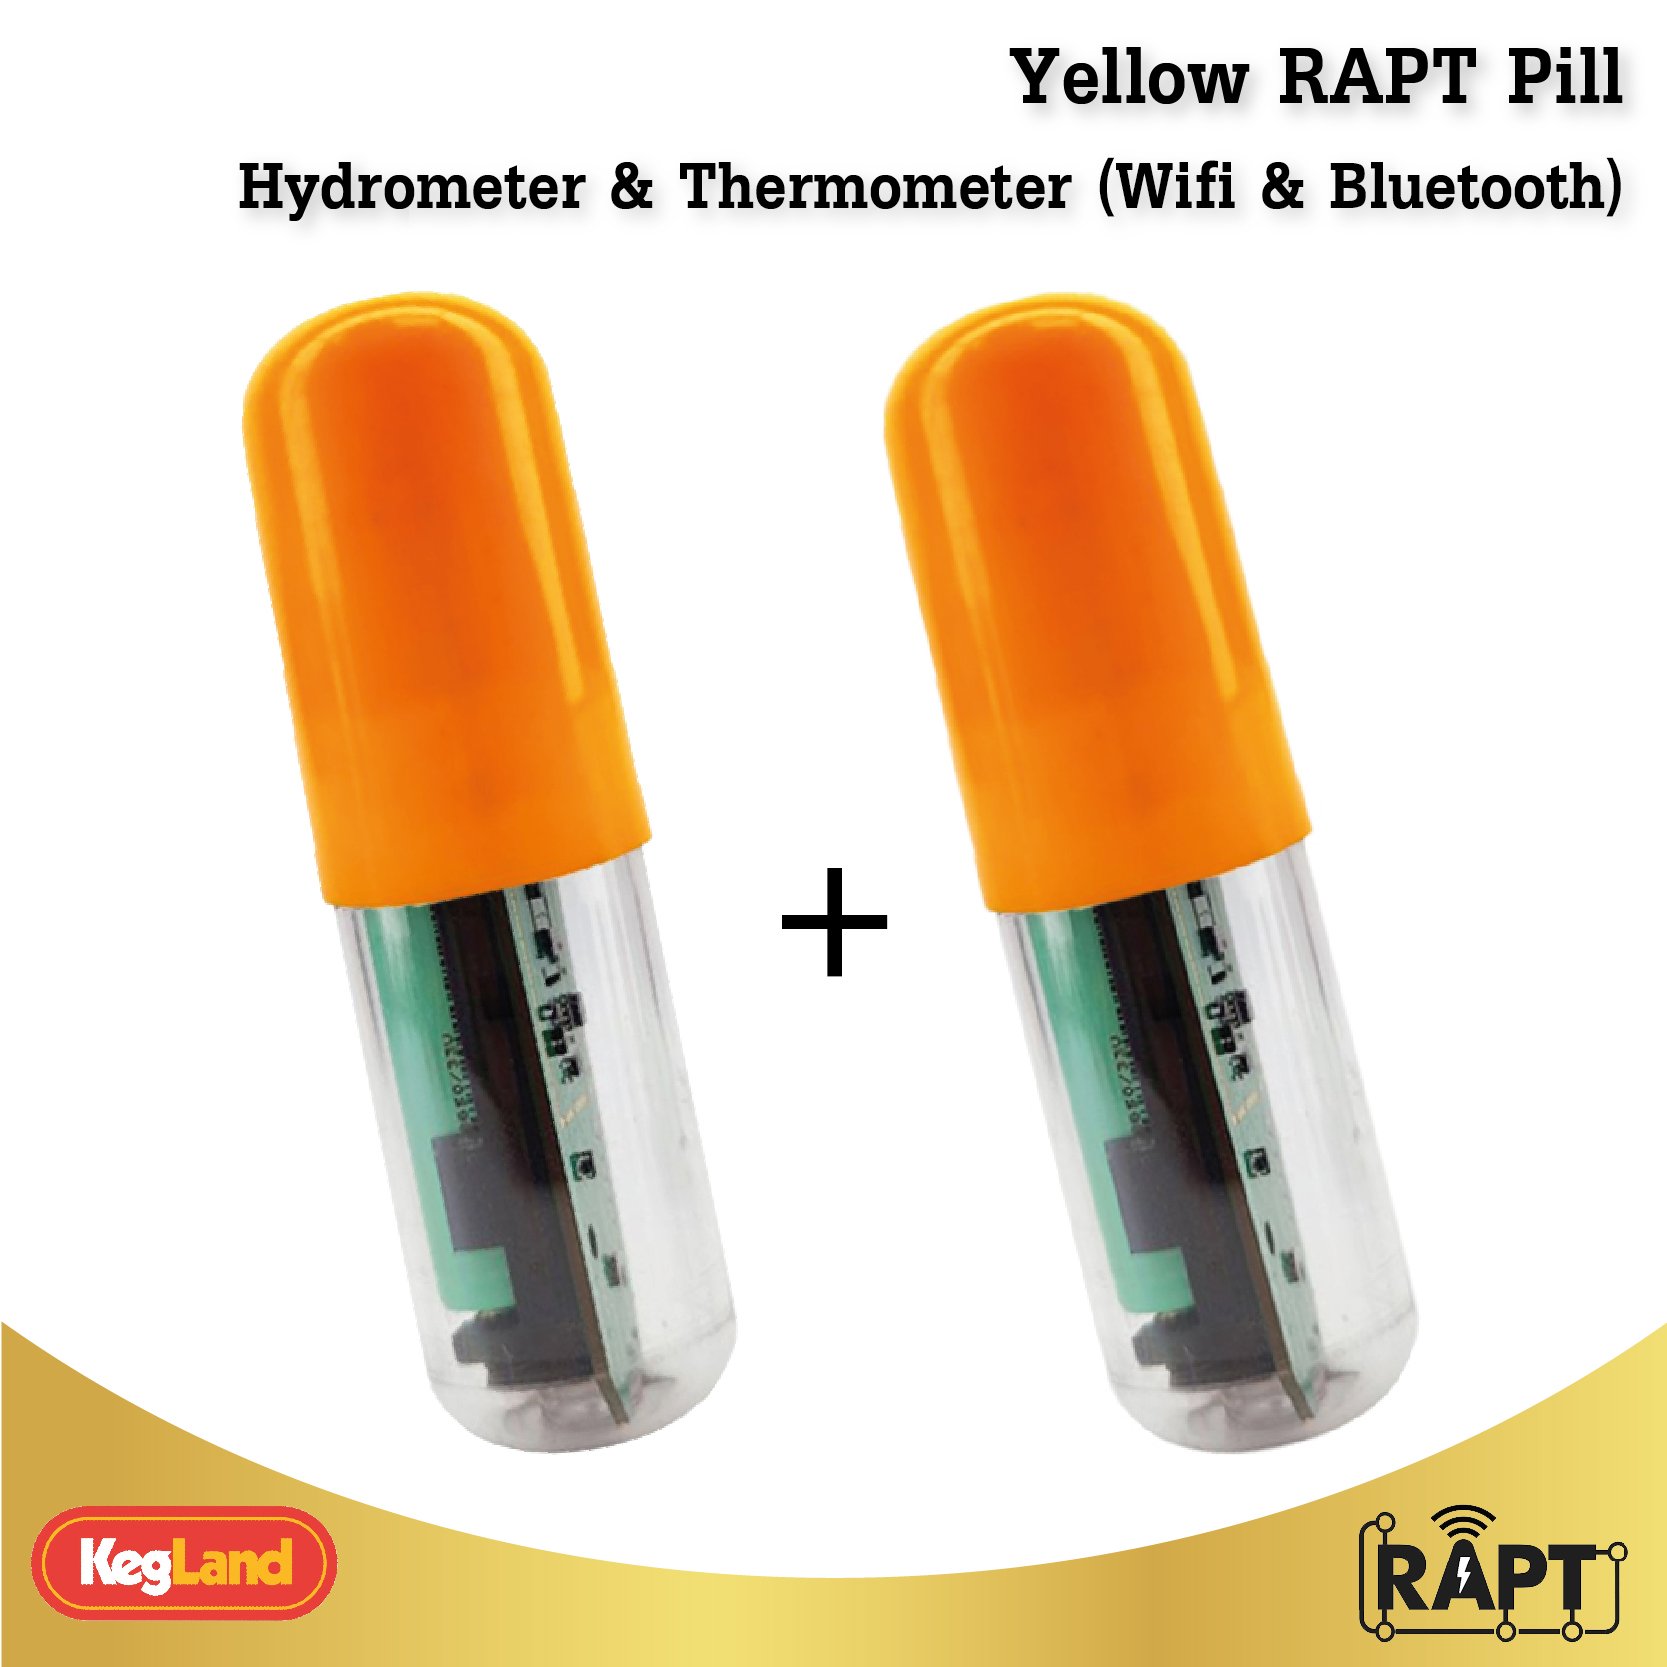 Yellow RAPT Pill x 2 ถูกกว่า